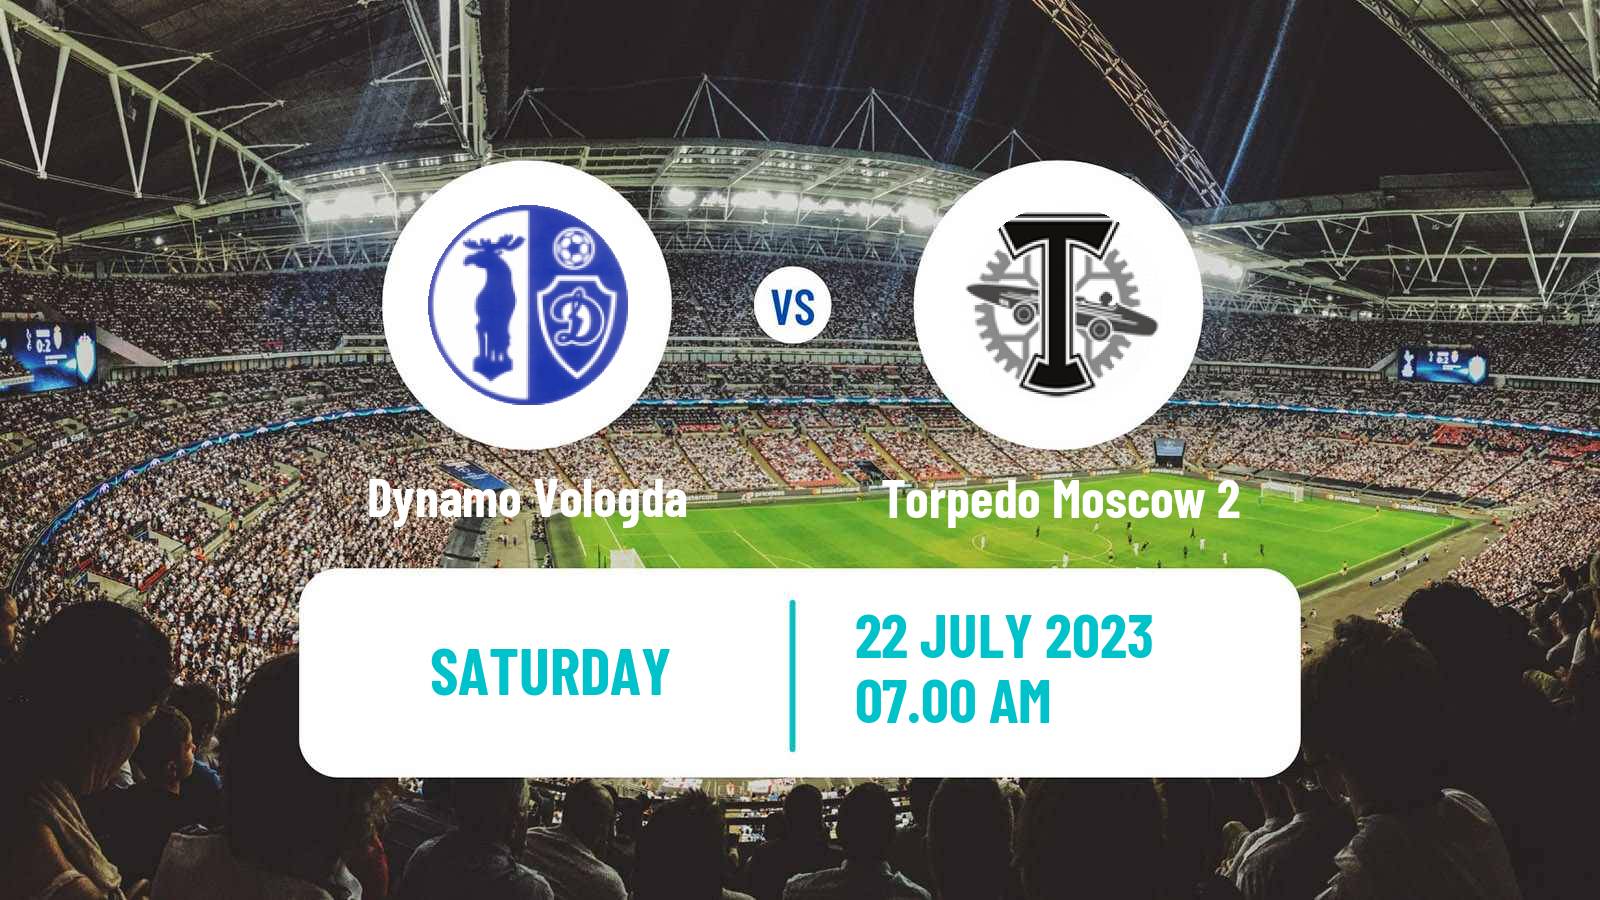 Soccer FNL 2 Division B Group 2 Dynamo Vologda - Torpedo Moscow 2